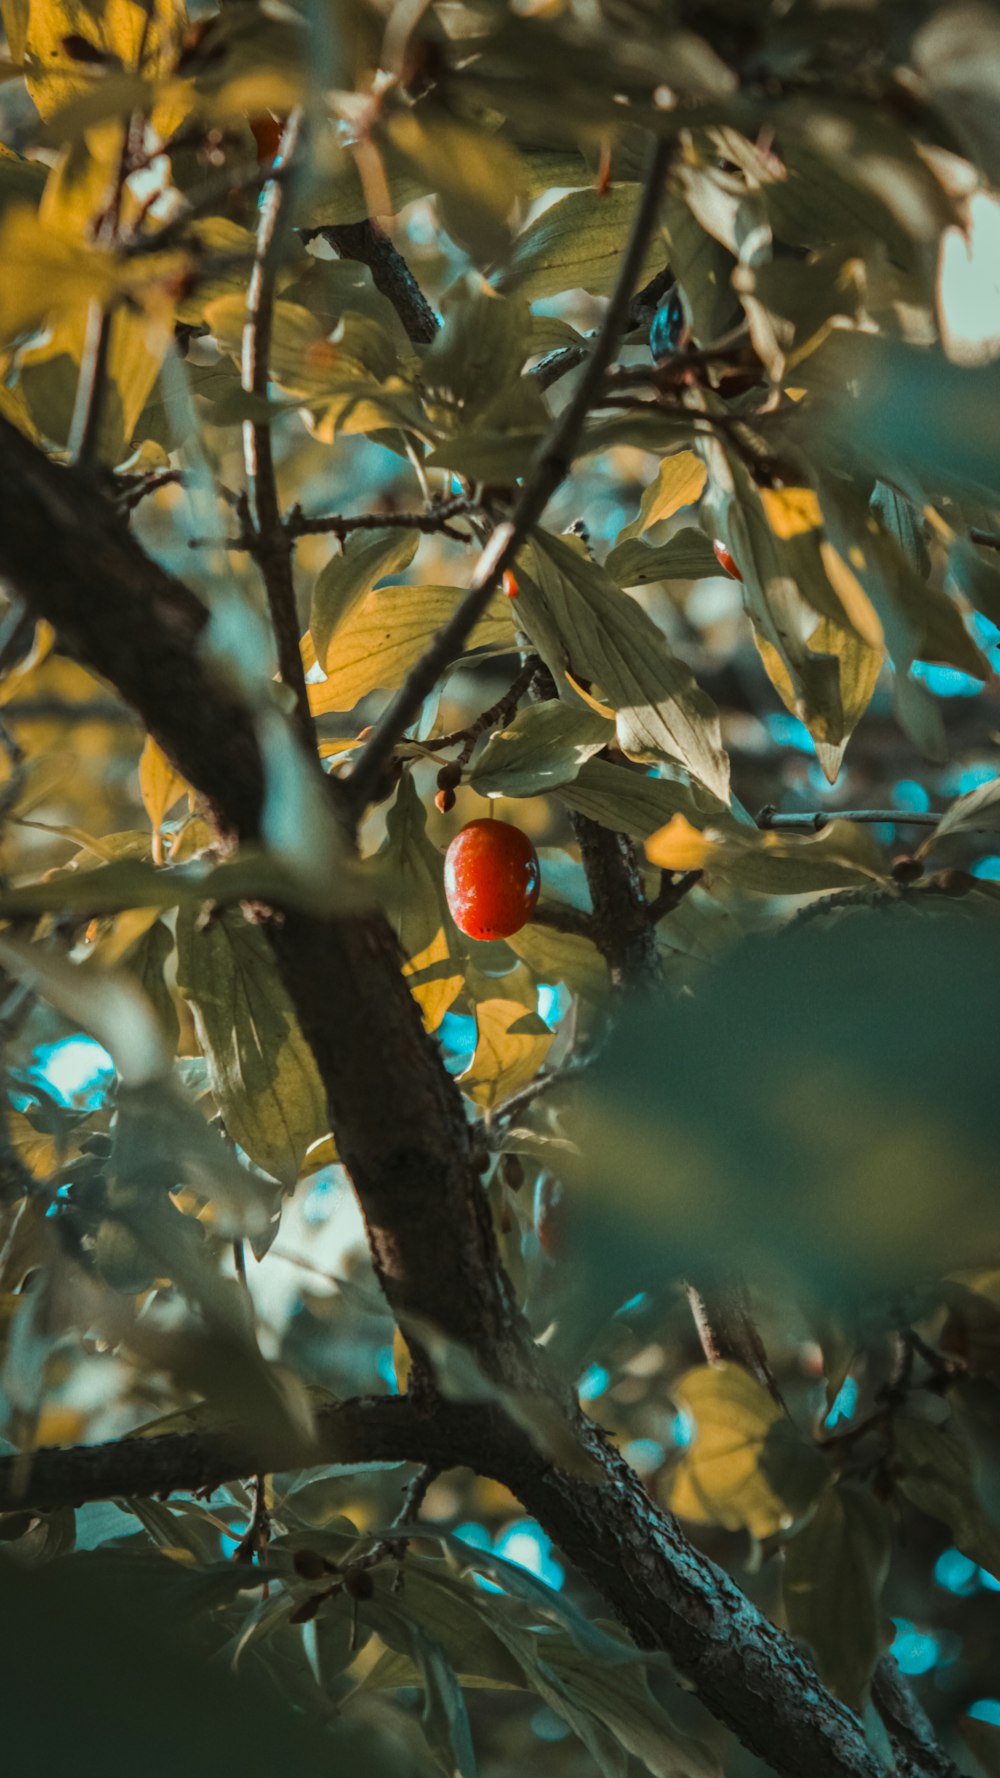 red round fruit on tree